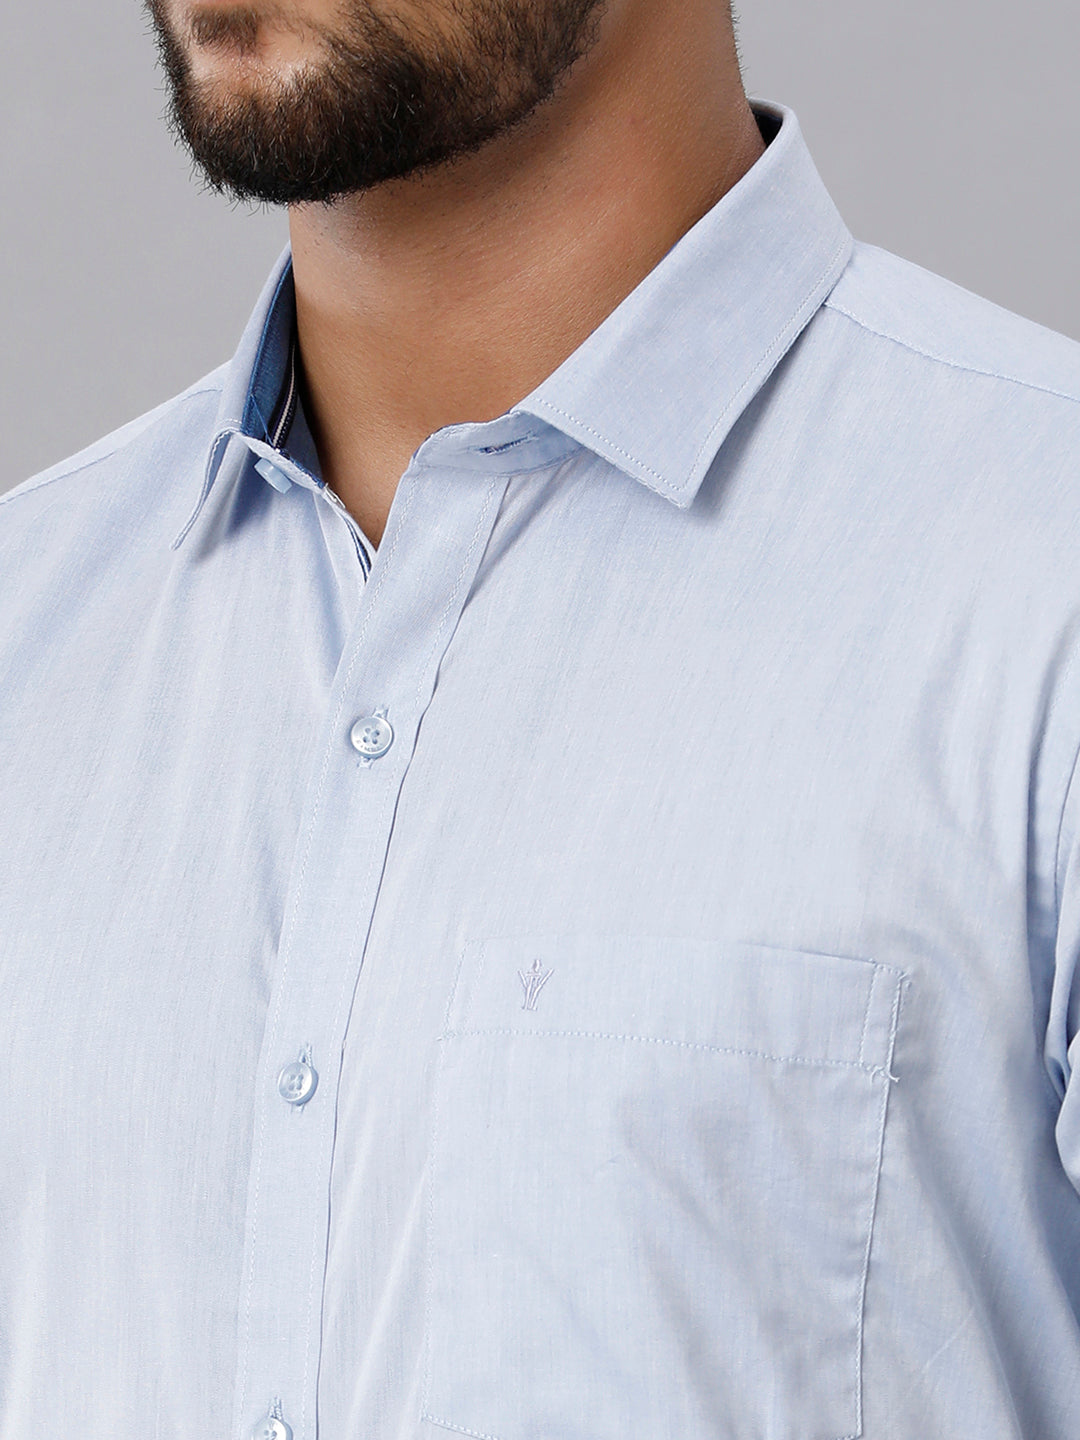 Mens Premium Cotton Formal Shirt Half Sleeves Blue MH G119